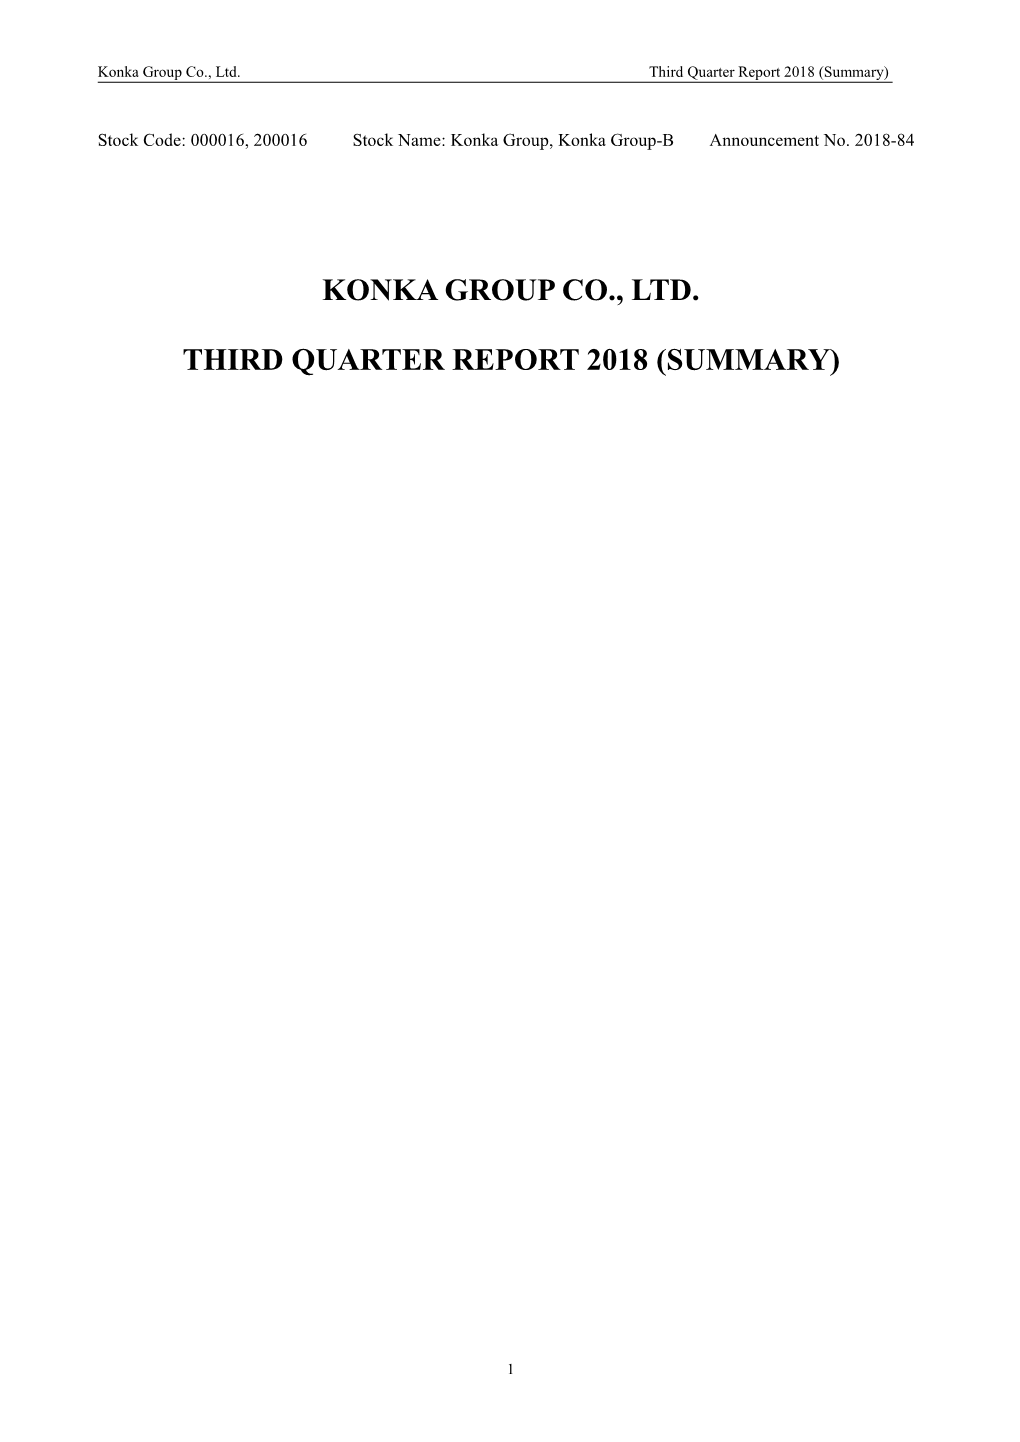 Konka Group Co., Ltd. Third Quarter Report 2018 (Summary)